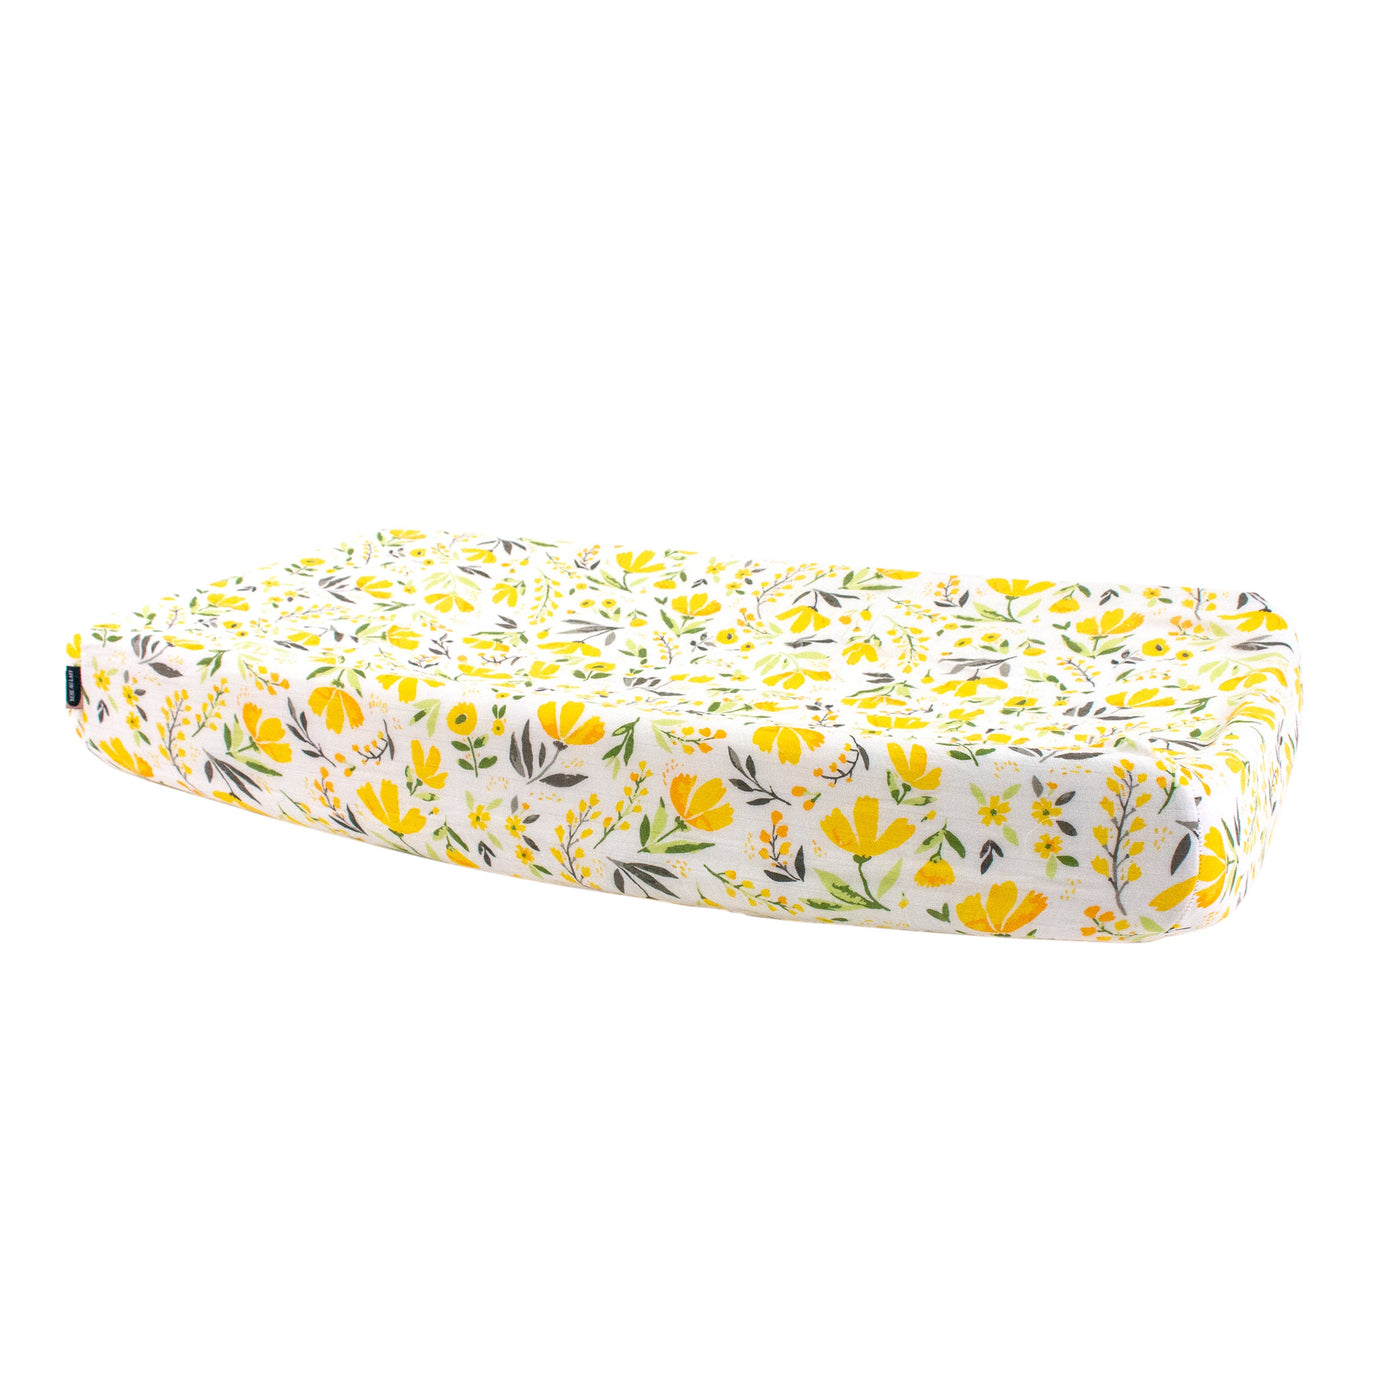 Floral Alphabet Oh So Soft Muslin Crib Sheet + Royal Garden Oh So Soft Muslin Changing Pad Cover Set - Bebe au Lait